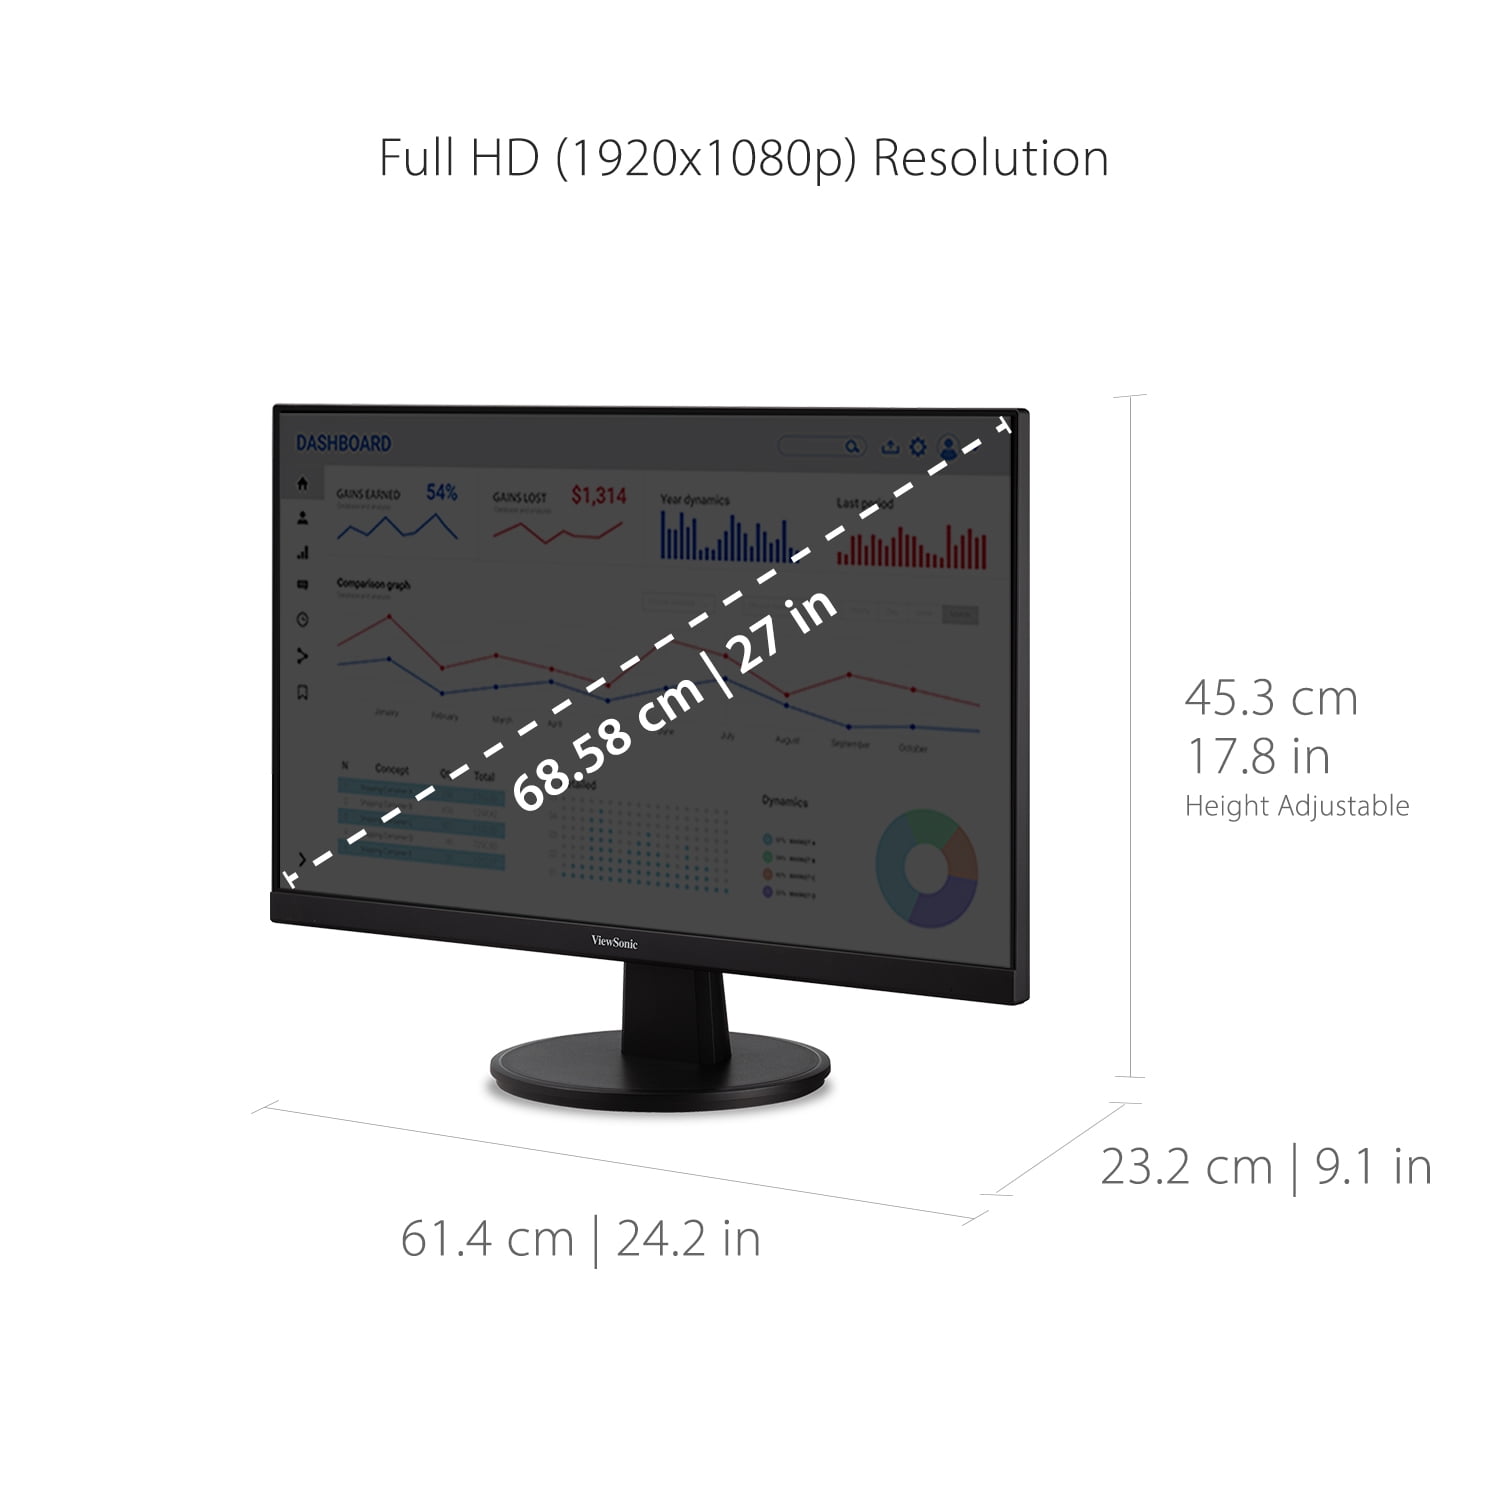 ViewSonic VA2747-MH, 27 1080p MVA Monitor with HDMI and VGA